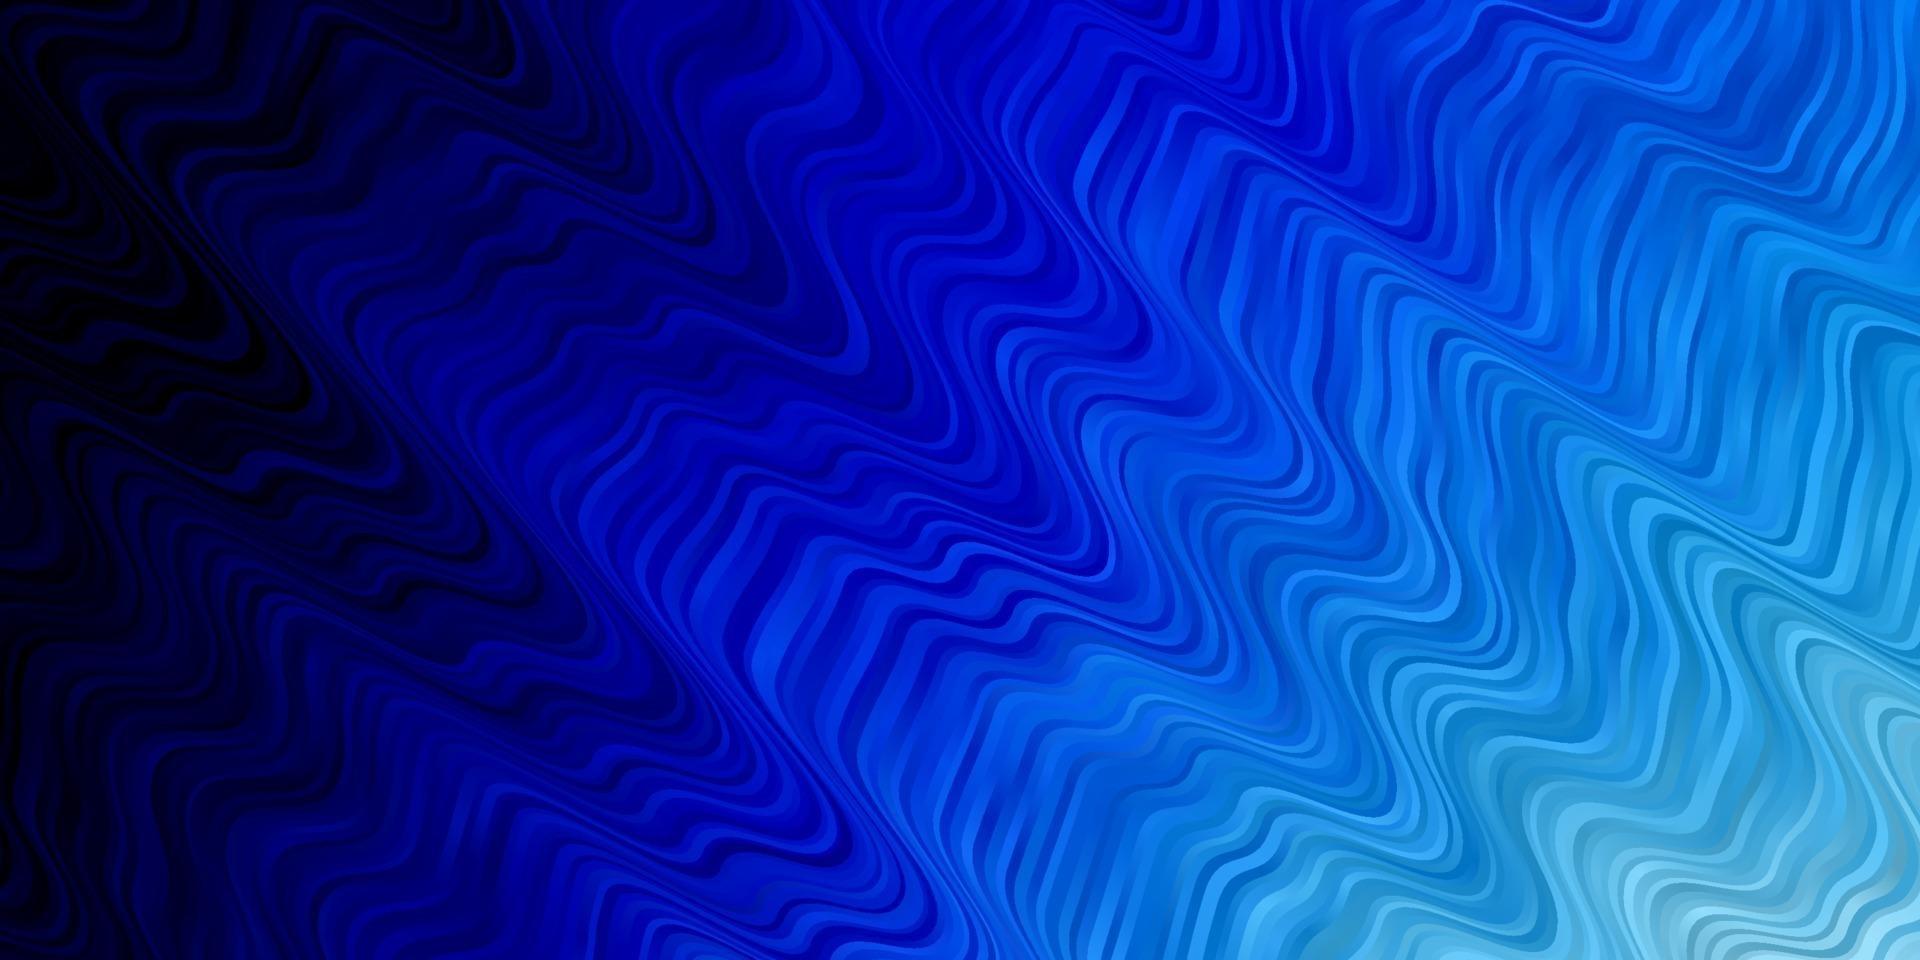 plantilla de vector azul claro con líneas torcidas.